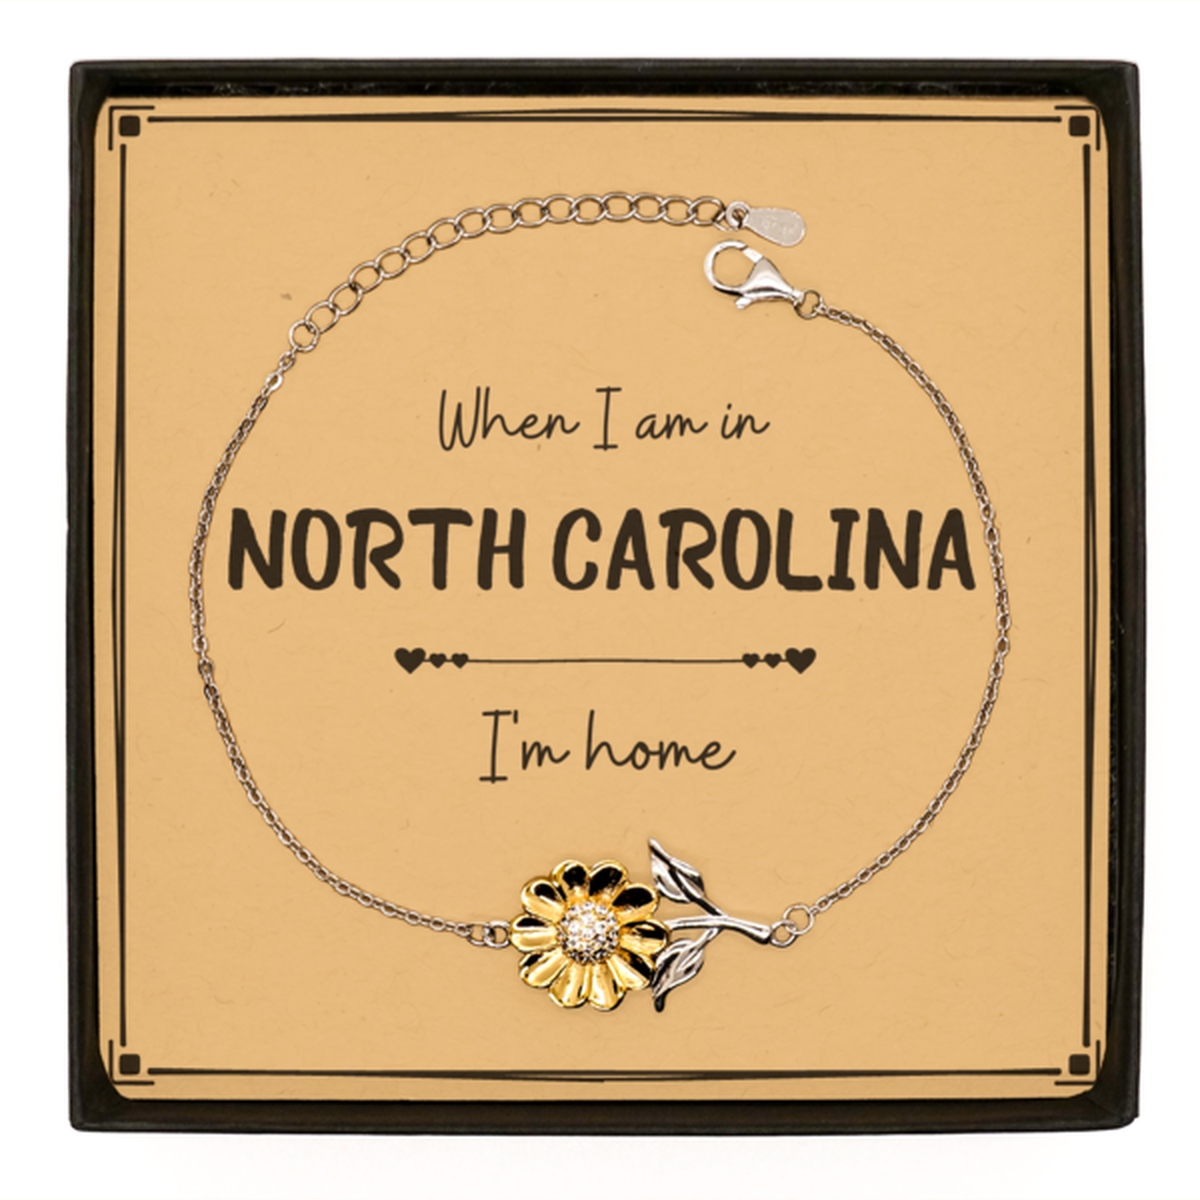 When I am in North Carolina I'm home Sunflower Bracelet, Message Card Gifts For North Carolina, State North Carolina Birthday Gifts for Friends Coworker